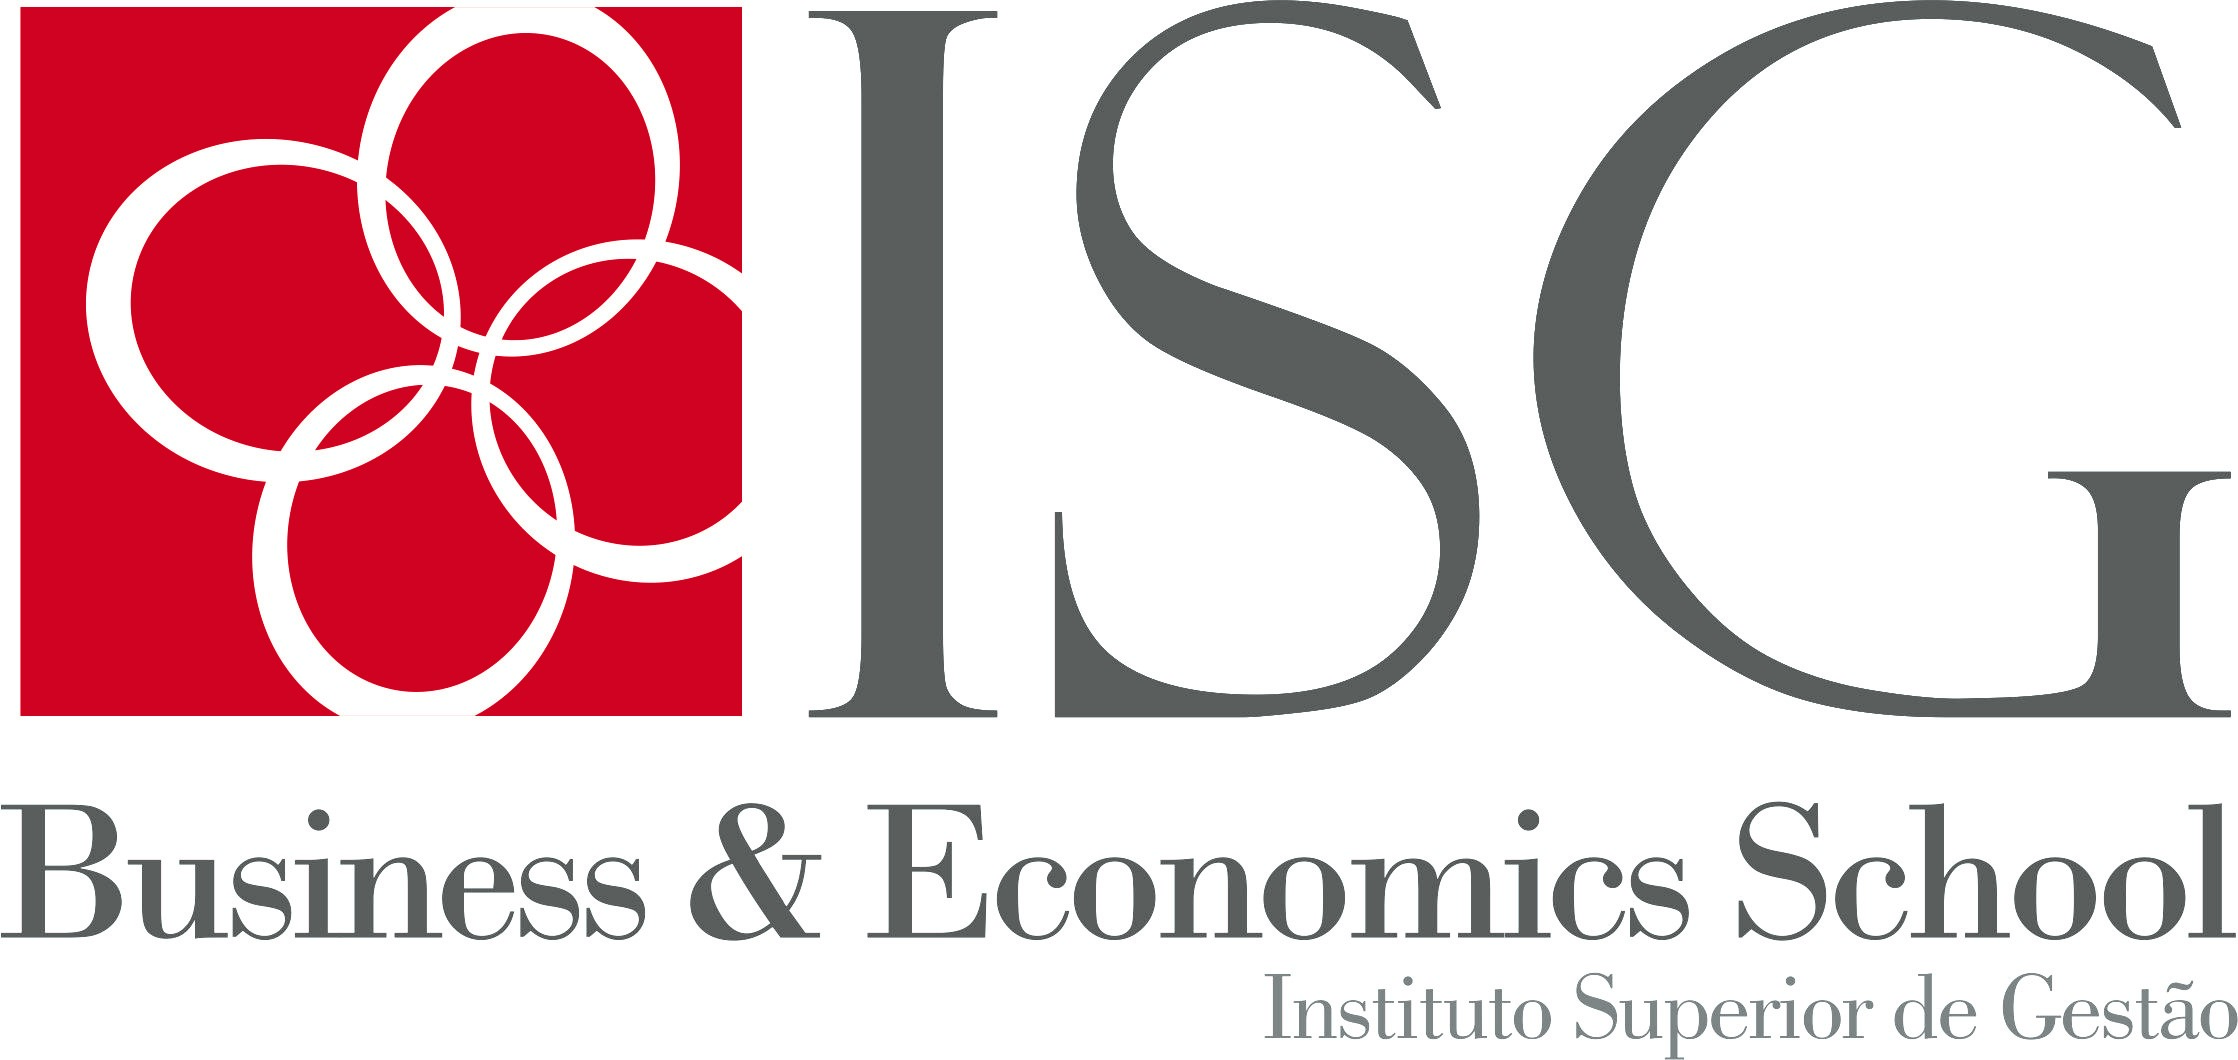 ISG Logo 20170905